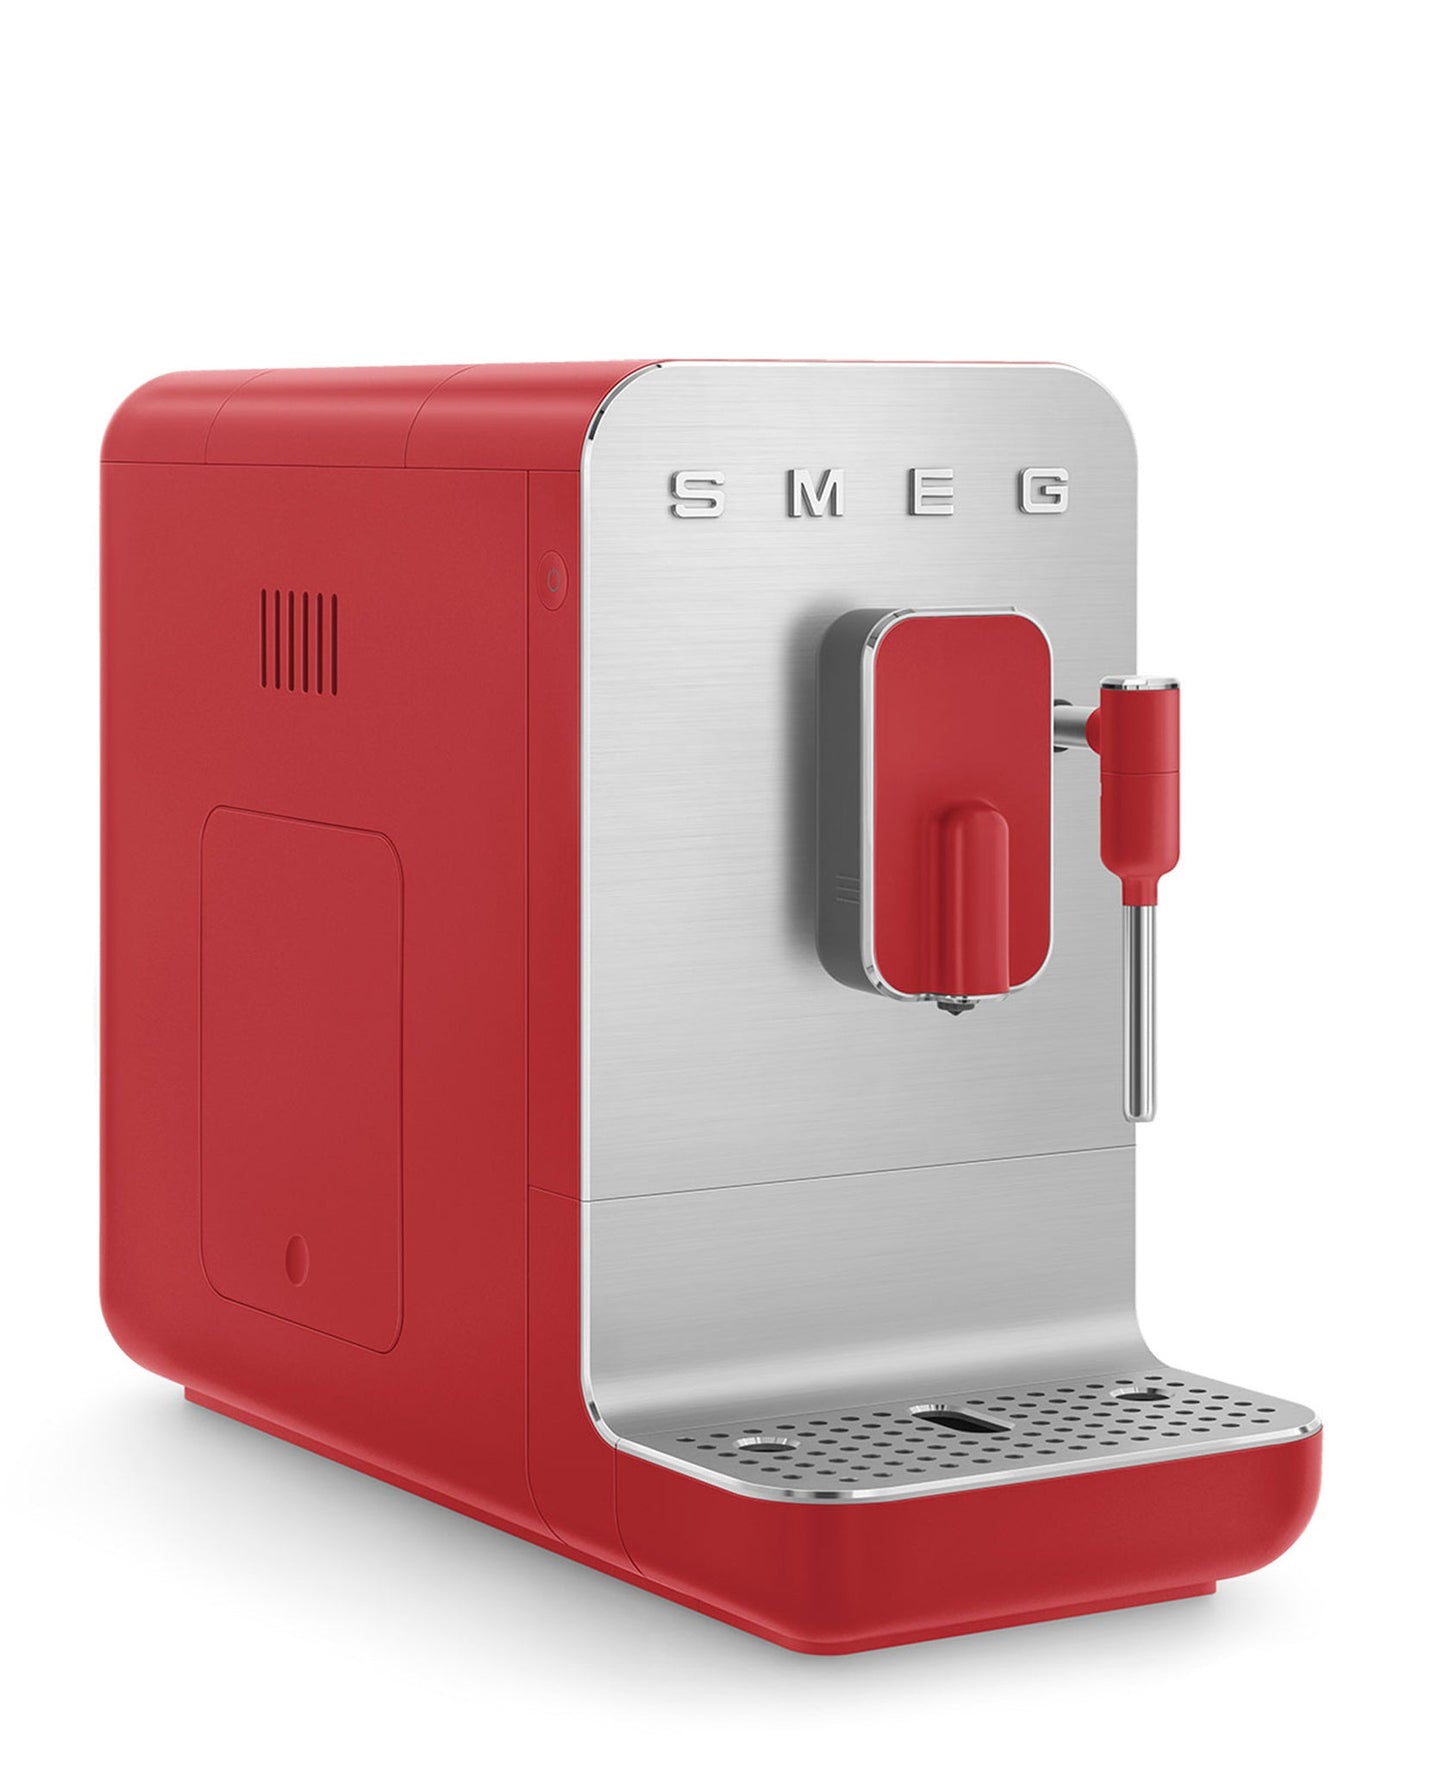 Smeg - Espresso Automatic Coffee Machine - Red